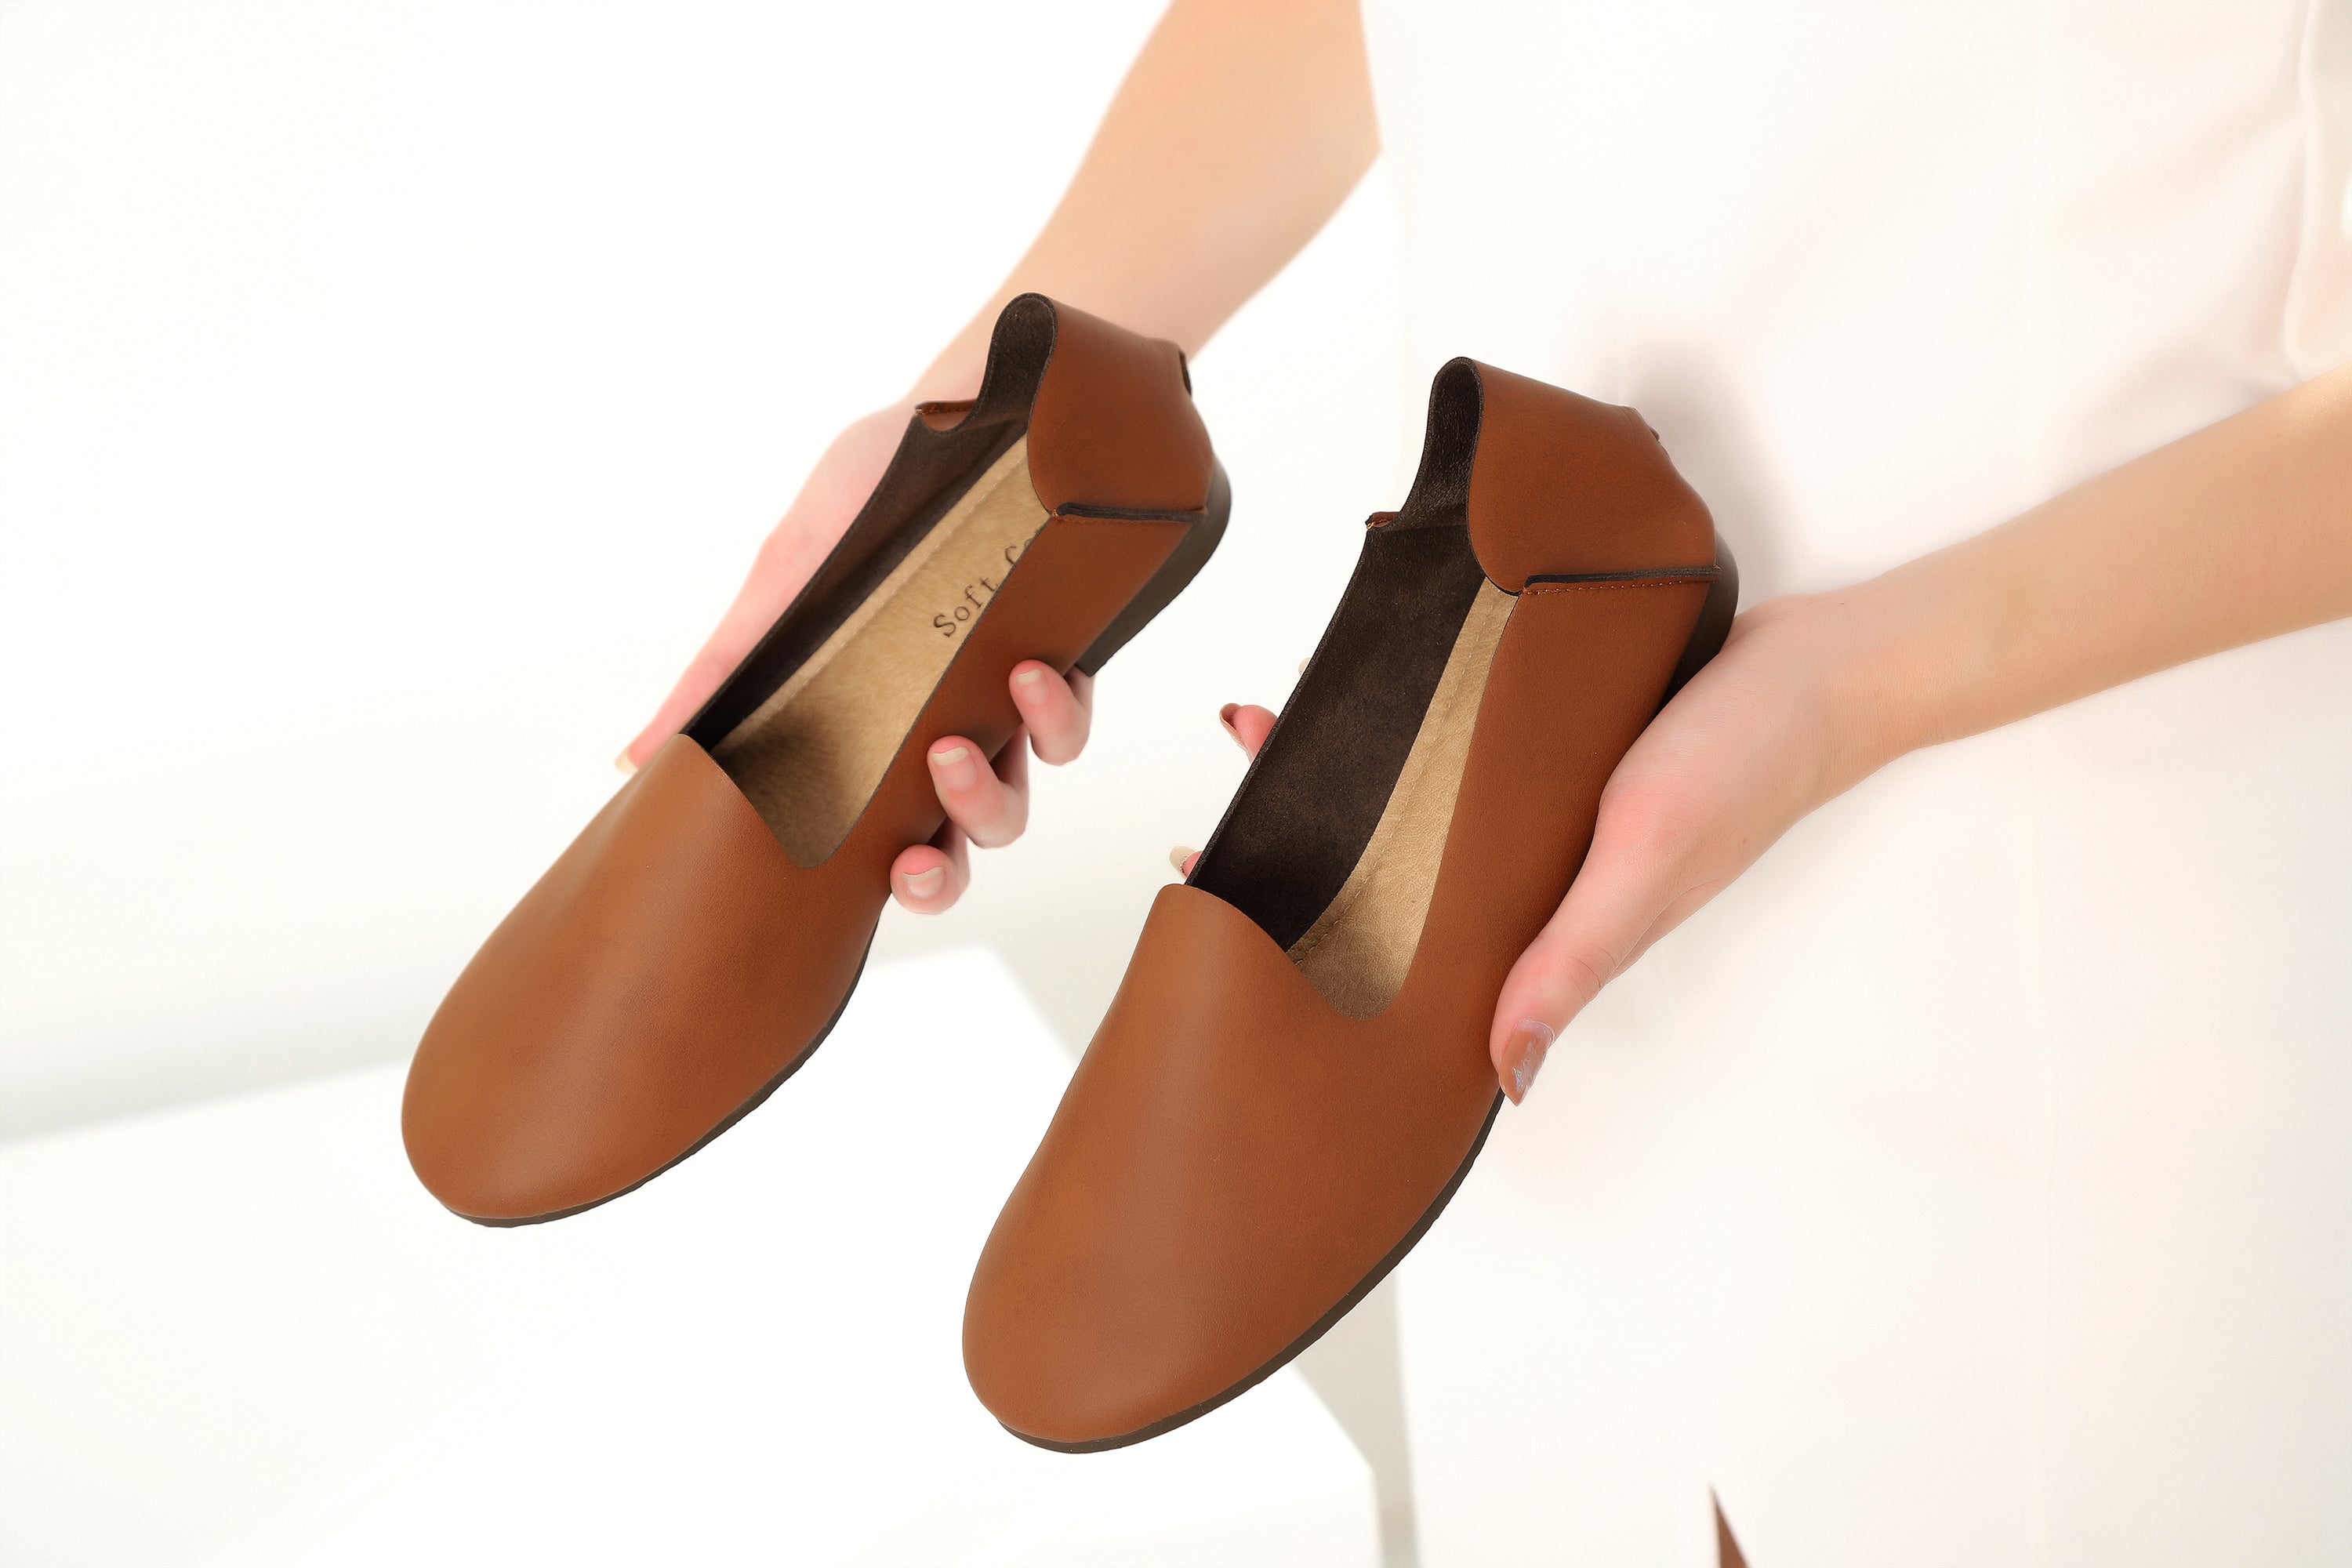 2 Ways Flats Shoes (Japan)-SOFT CONTACT-AD-JP Size-2: 35S-偉豐鞋 WELL SHOE HK-Well Shoe-偉豐鞋-偉豐網-荃灣鞋店-Functional shoes-Hong Kong Tsuen Wan Shoe Store-Tai Wan Shoe-Japan Shoe-高品質功能鞋-台灣進口鞋-日本進口鞋-High-quality shoes-鞋類配件-荃灣進口鞋-香港鞋店-優質鞋類產品-水靴-帆布鞋-廚師鞋-香港鞋品牌-Hong Kong Shoes brand-長者鞋-Hong Kong Rain Boots-Kitchen shoes-Cruthes-Slipper-Well Shoe Hong Kong-Anello-Arriba-休閒鞋-舒適鞋-健康鞋-皮鞋-Healthy shoes-Leather shoes-Hiking shoes